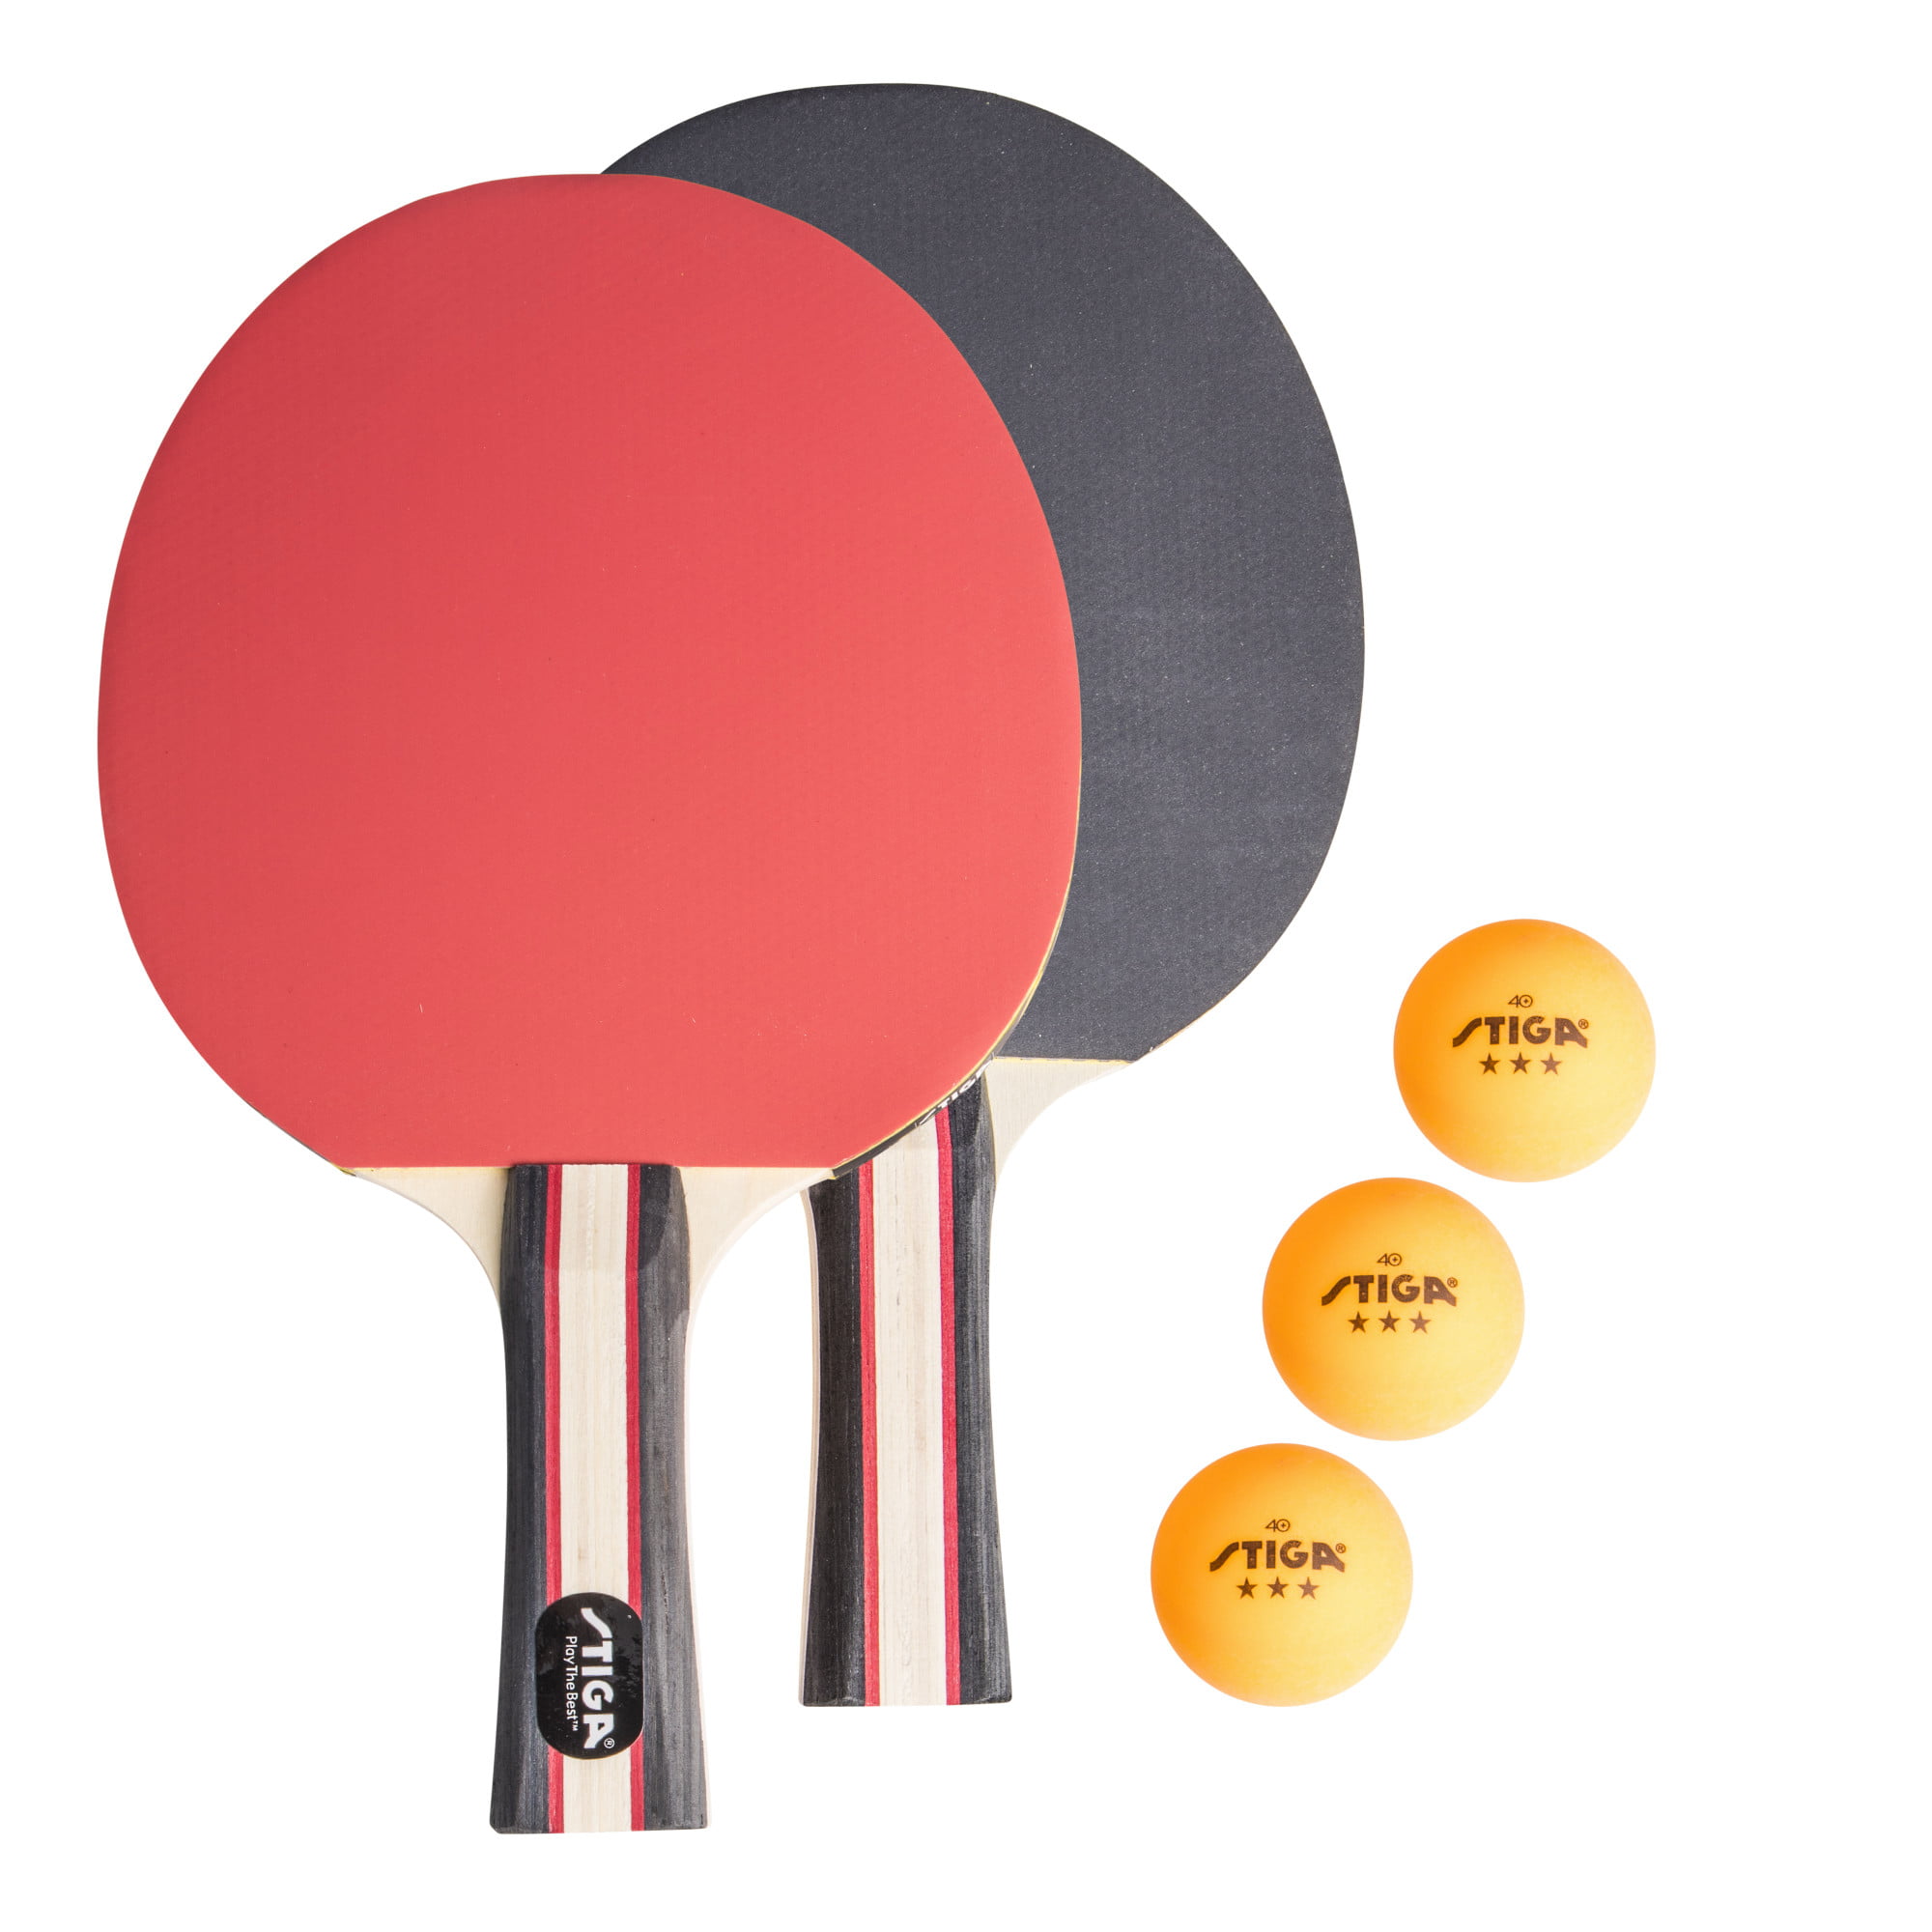 Killerspin Jet Set of 2 Ping Pong Paddles and 3 Table Tennis Balls 